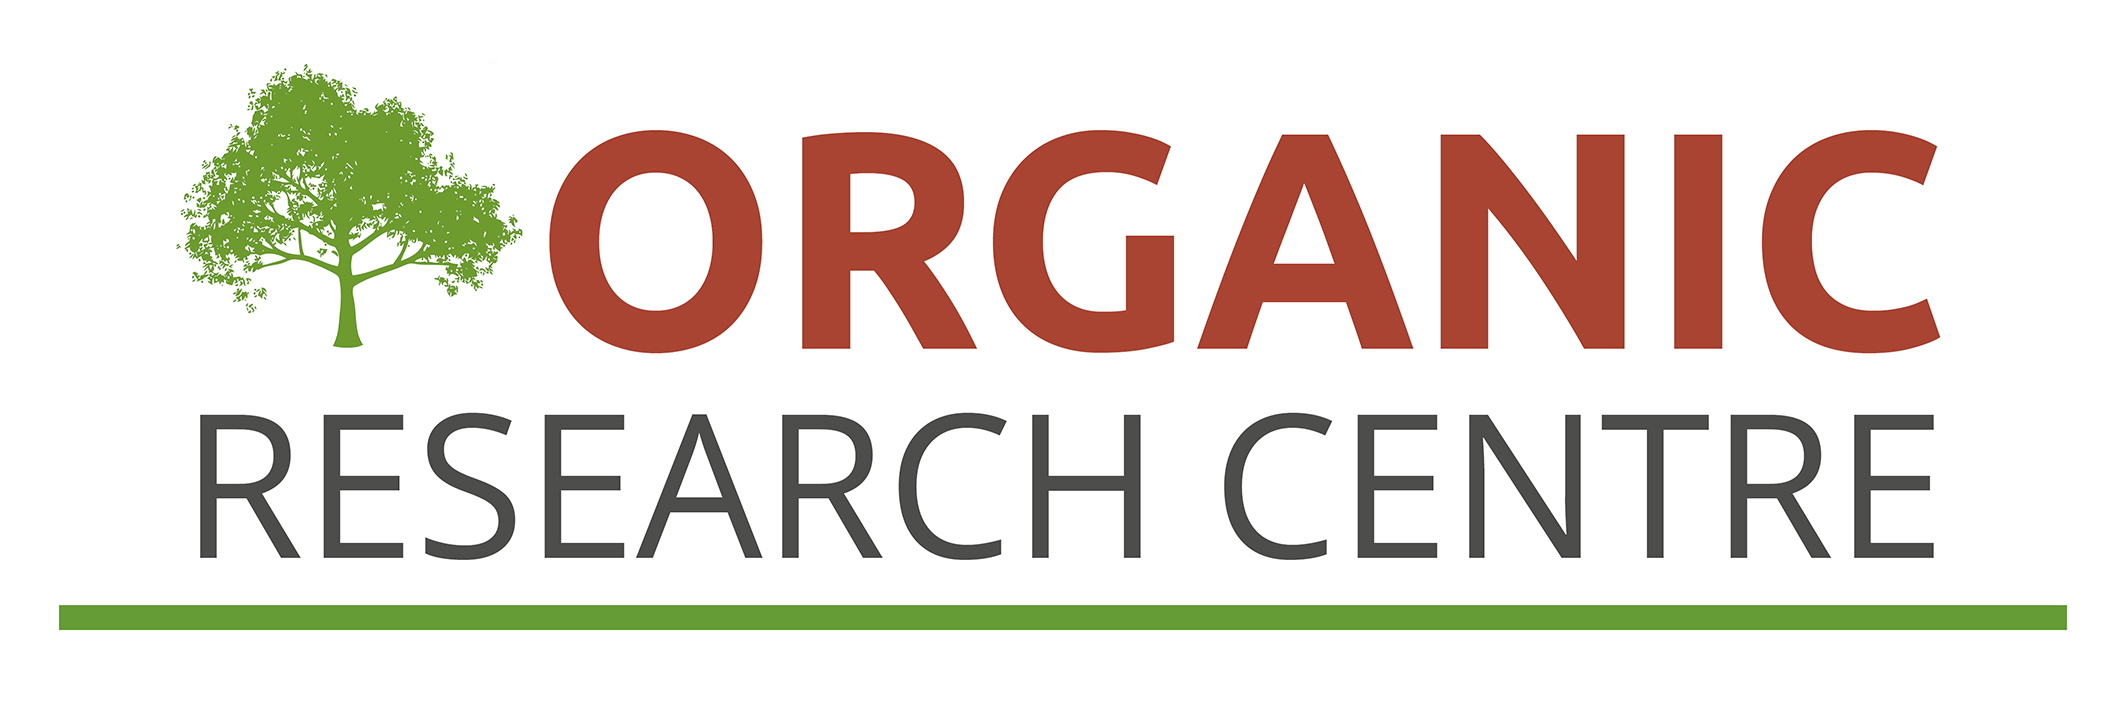 Organic Research Centre logo